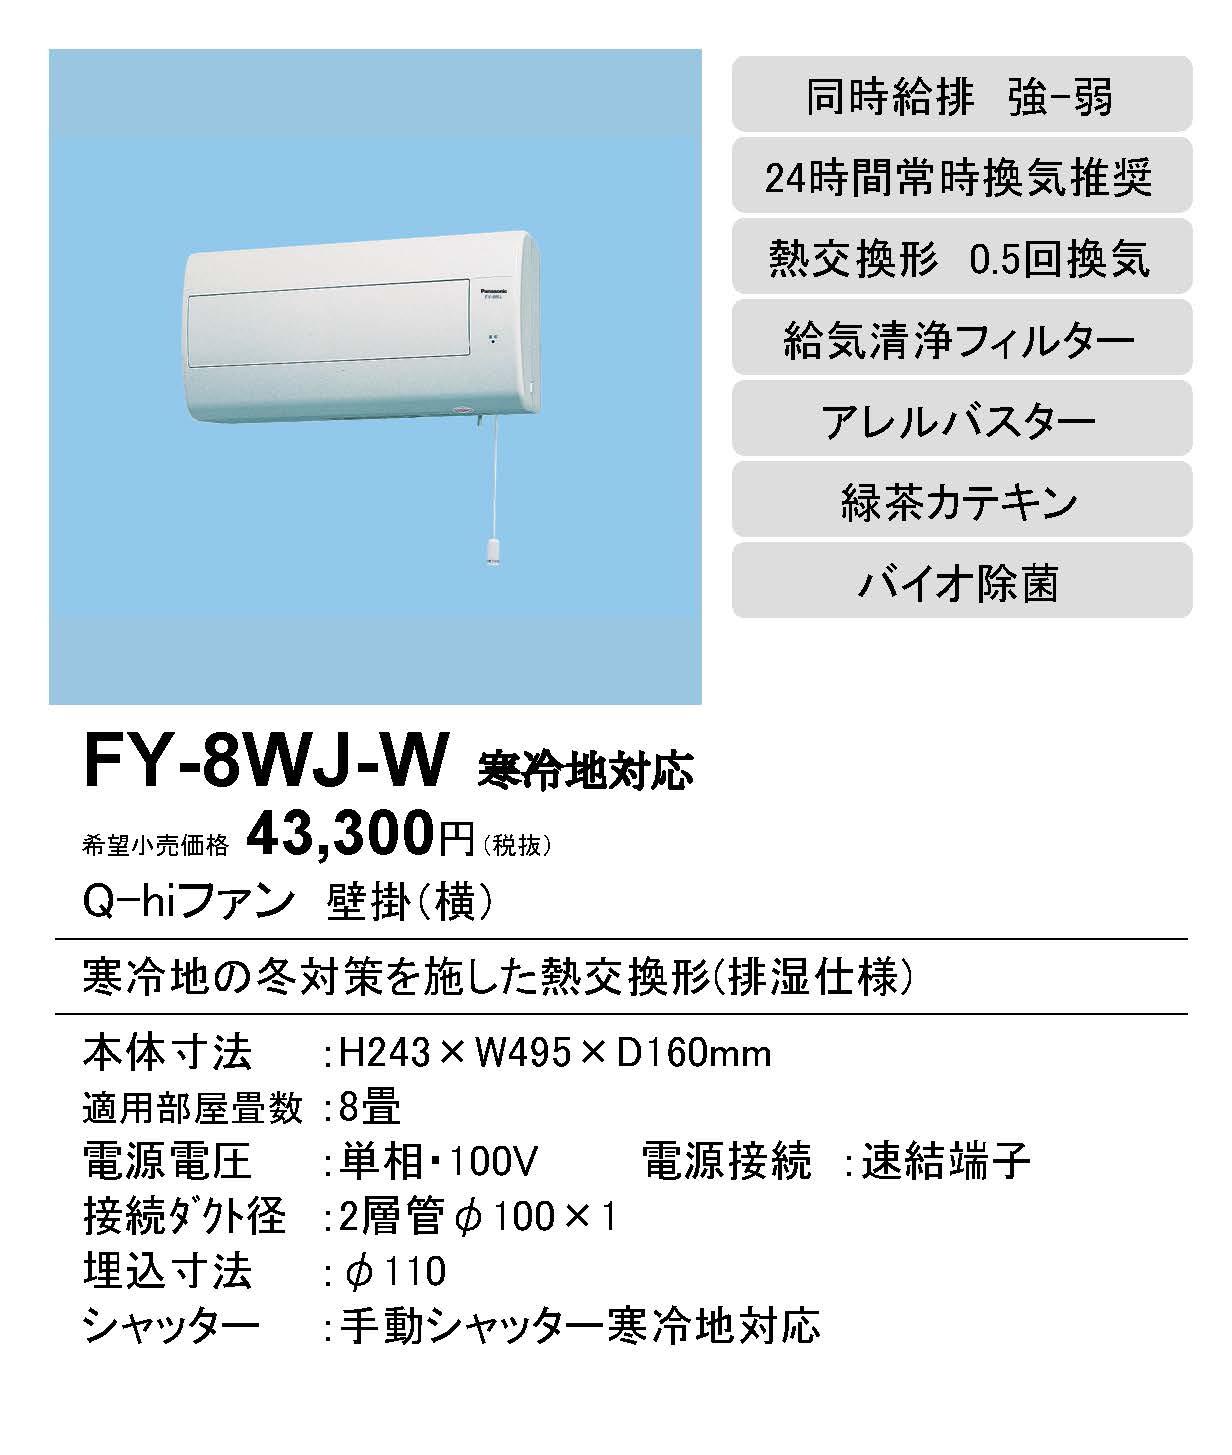 Panasonic パナソニック FY-8WJ-W Q-hiファン 壁掛形 1パイプ方式 熱交換形 寒冷地用 居室用 排湿形(0.5回/h 換気用) 8畳用 強制同時給排 強 弱 手動式シャッター